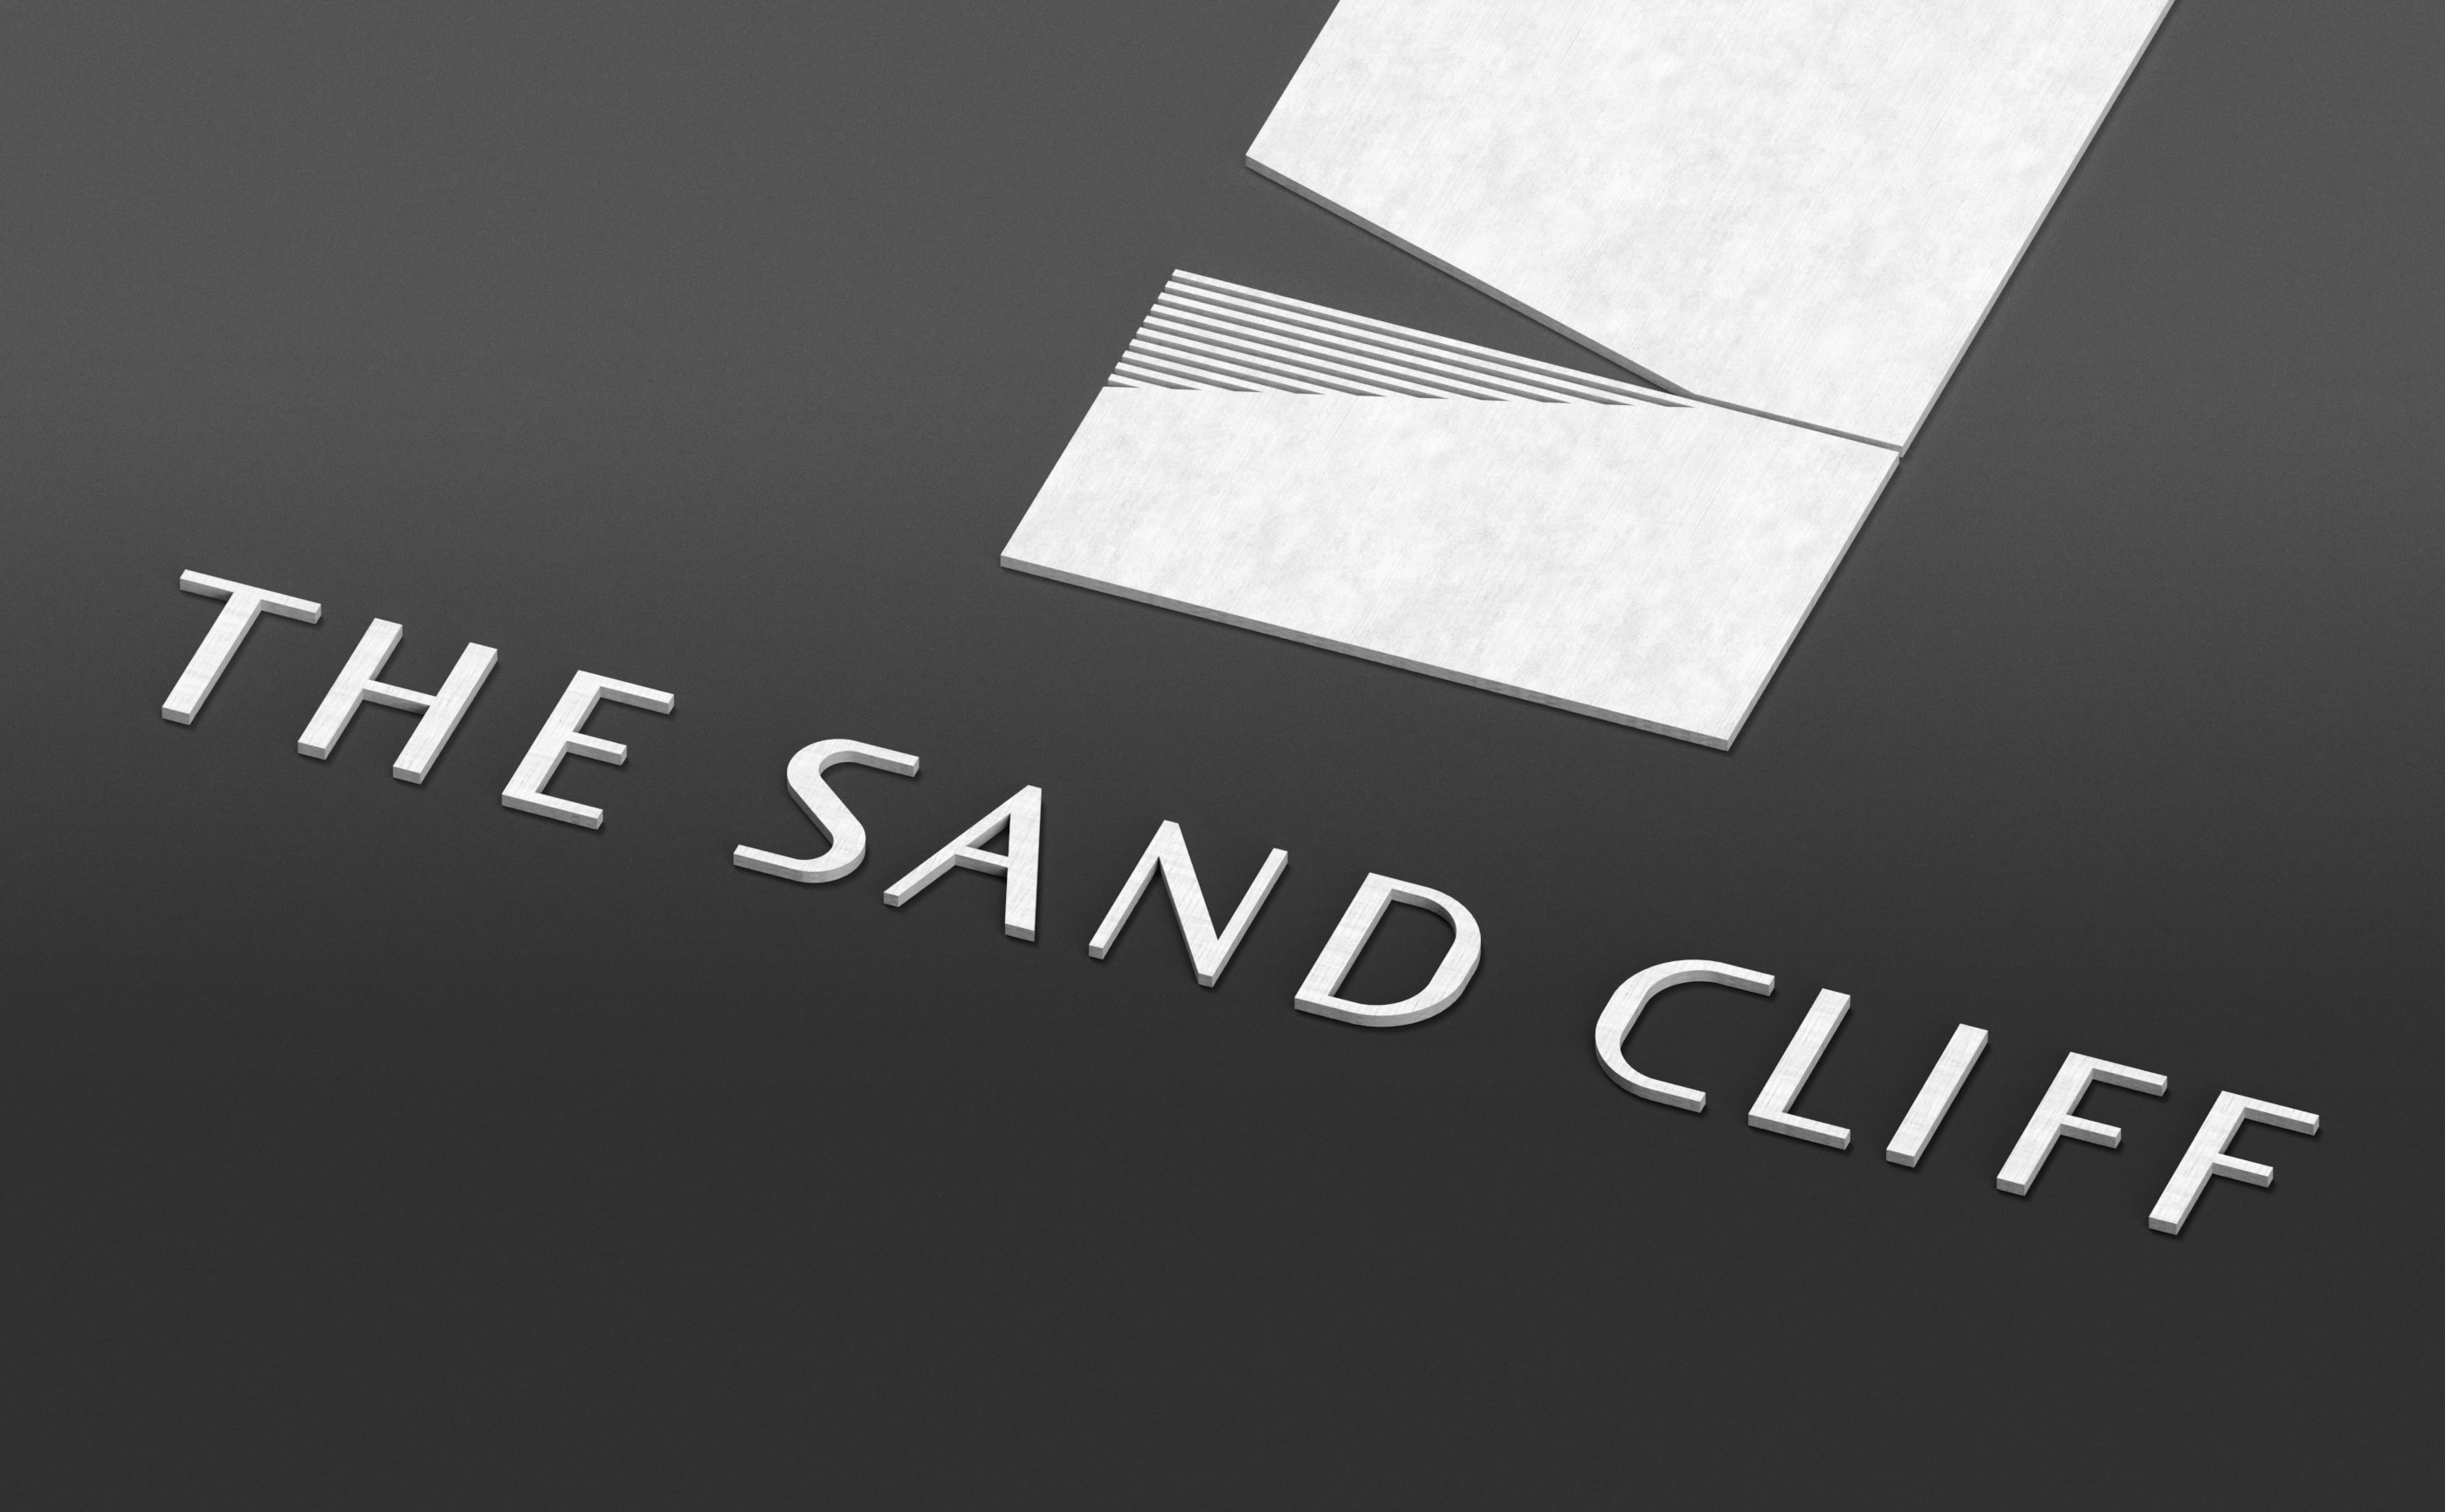 SandCliff_003